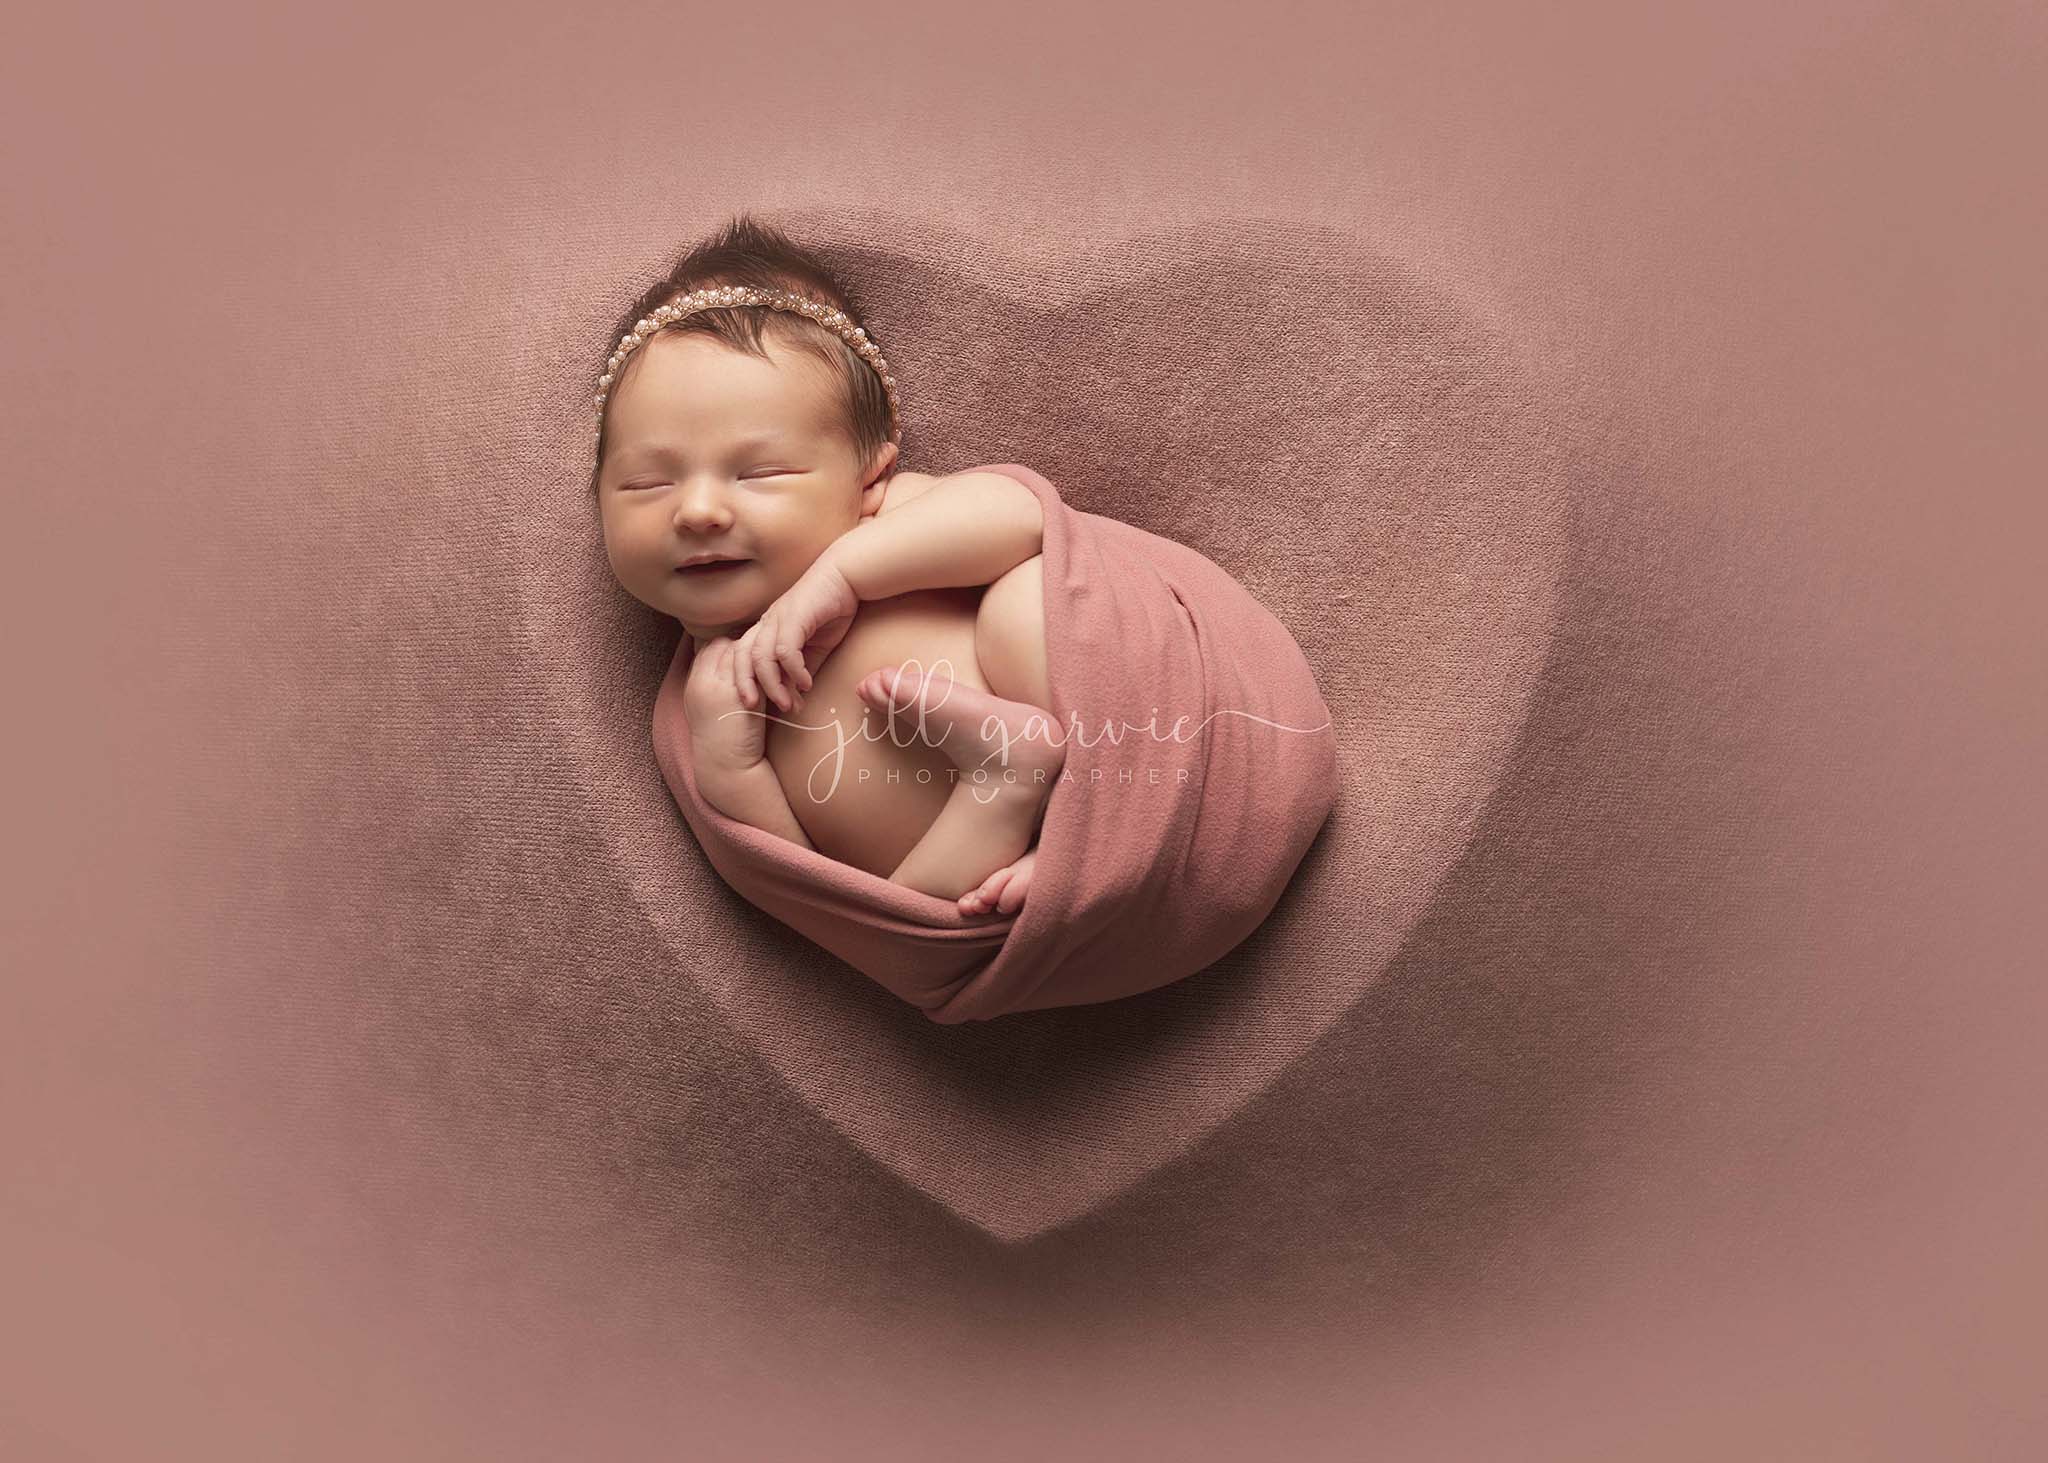 Photograph of Newborn baby taken at Jill Garvie Photography studio in Edinburgh